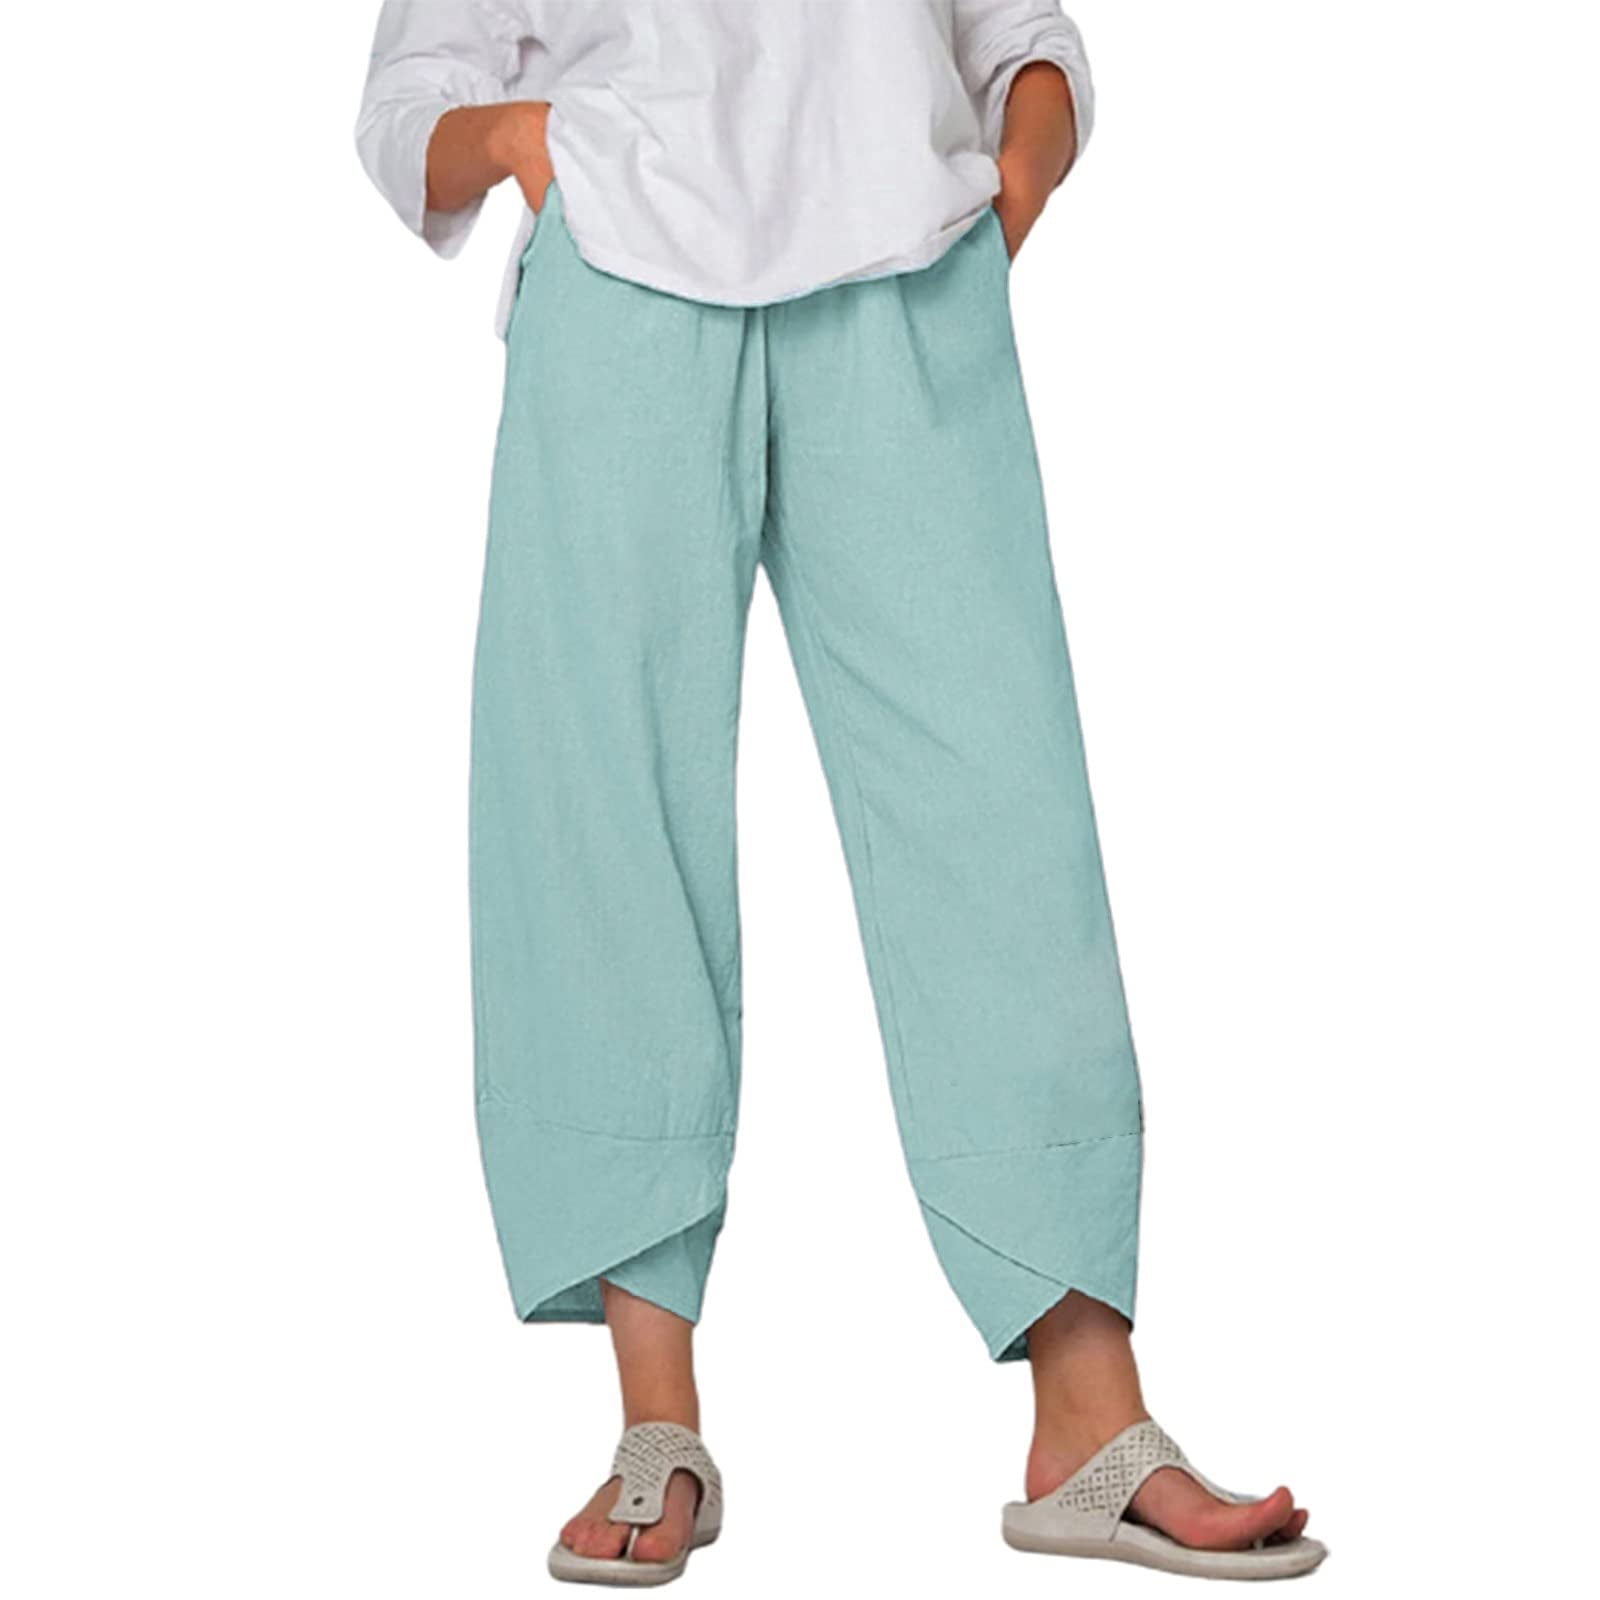 Women's Linen Crop Pants Casual Summer Floral Sweatpants Capri Lightweight Yoga Pant Retro Comfy Boho Trousers 